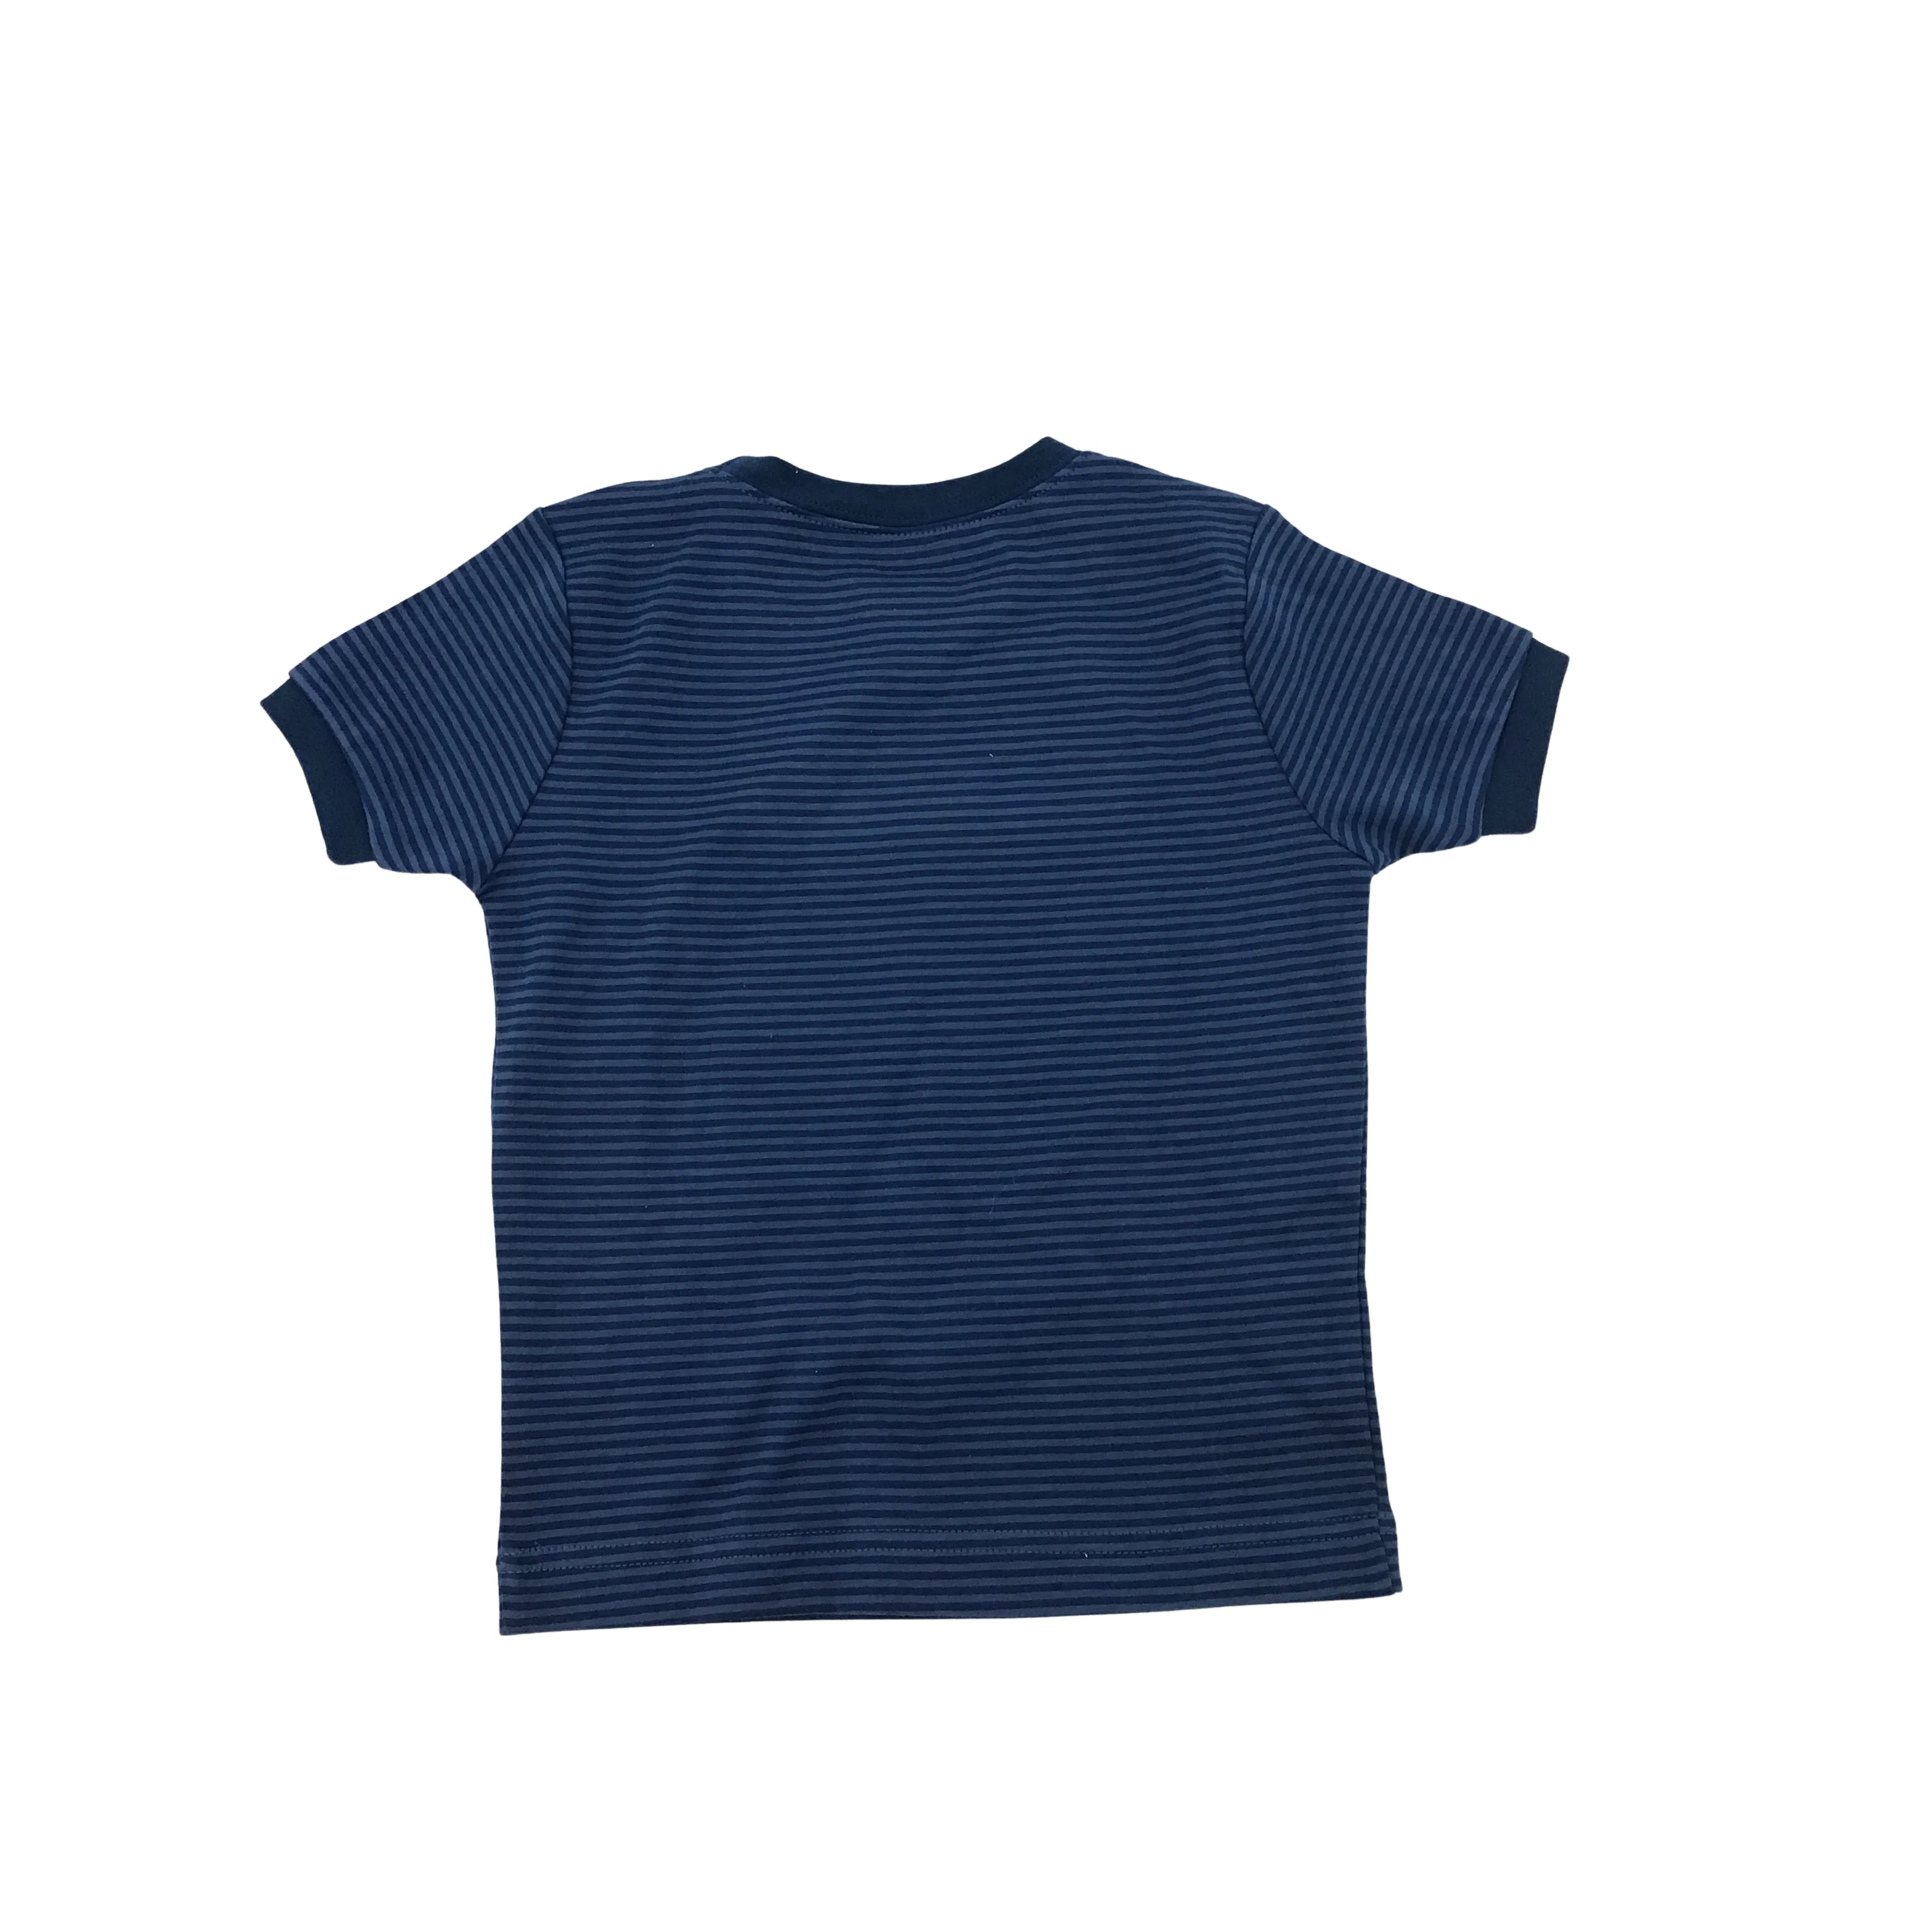 Pekkle: Boy's T-shirt / Blue / Striped / Skateboards / 4/5